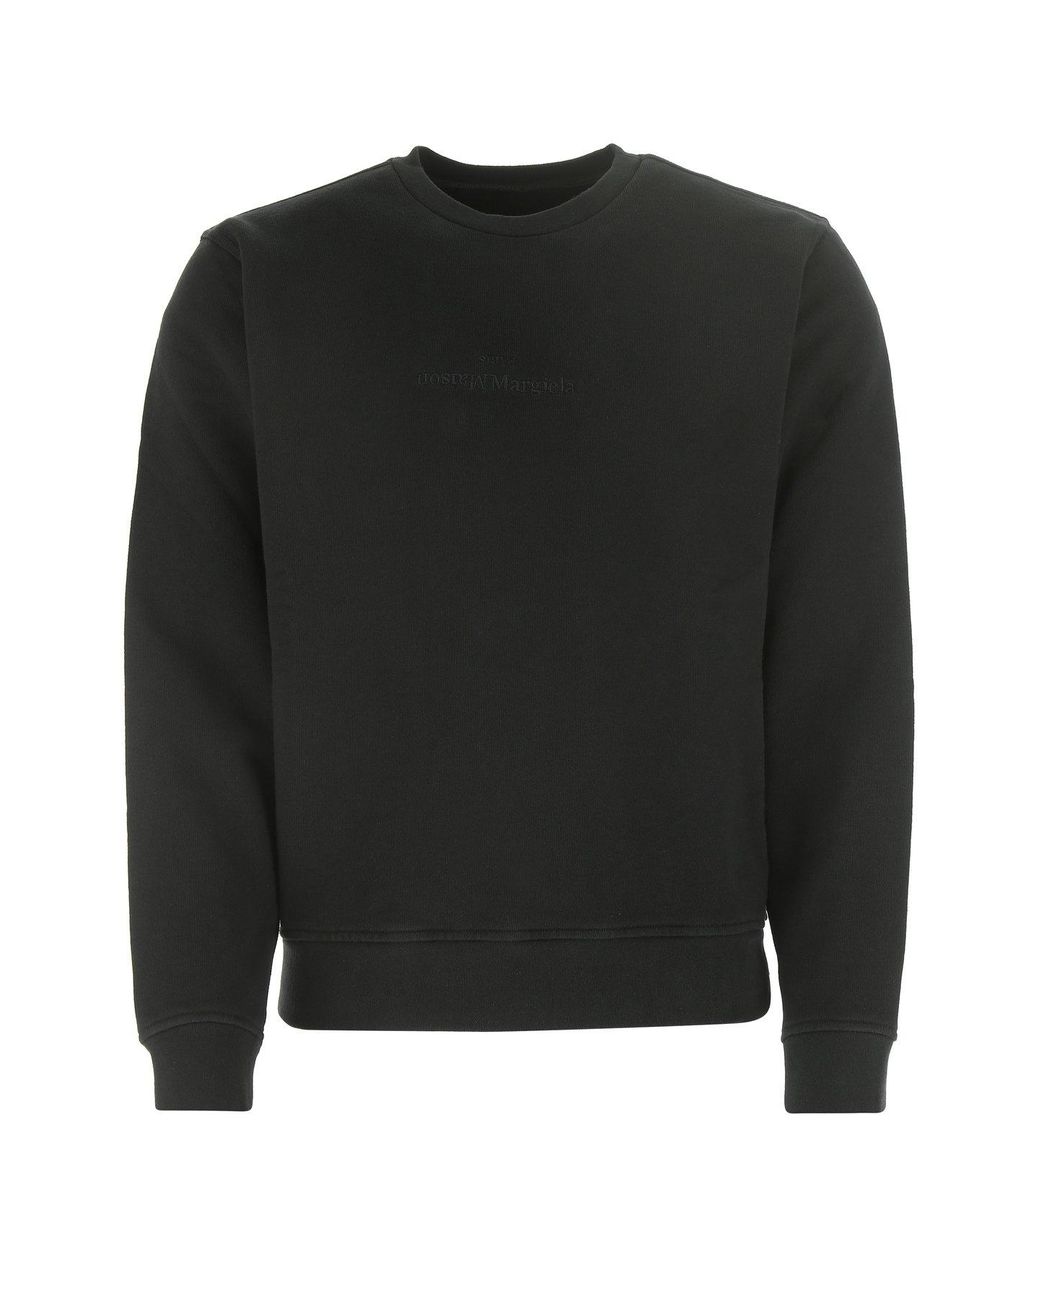 Maison Margiela Cotton Crewneck Sweatshirt in Black for Men - Lyst